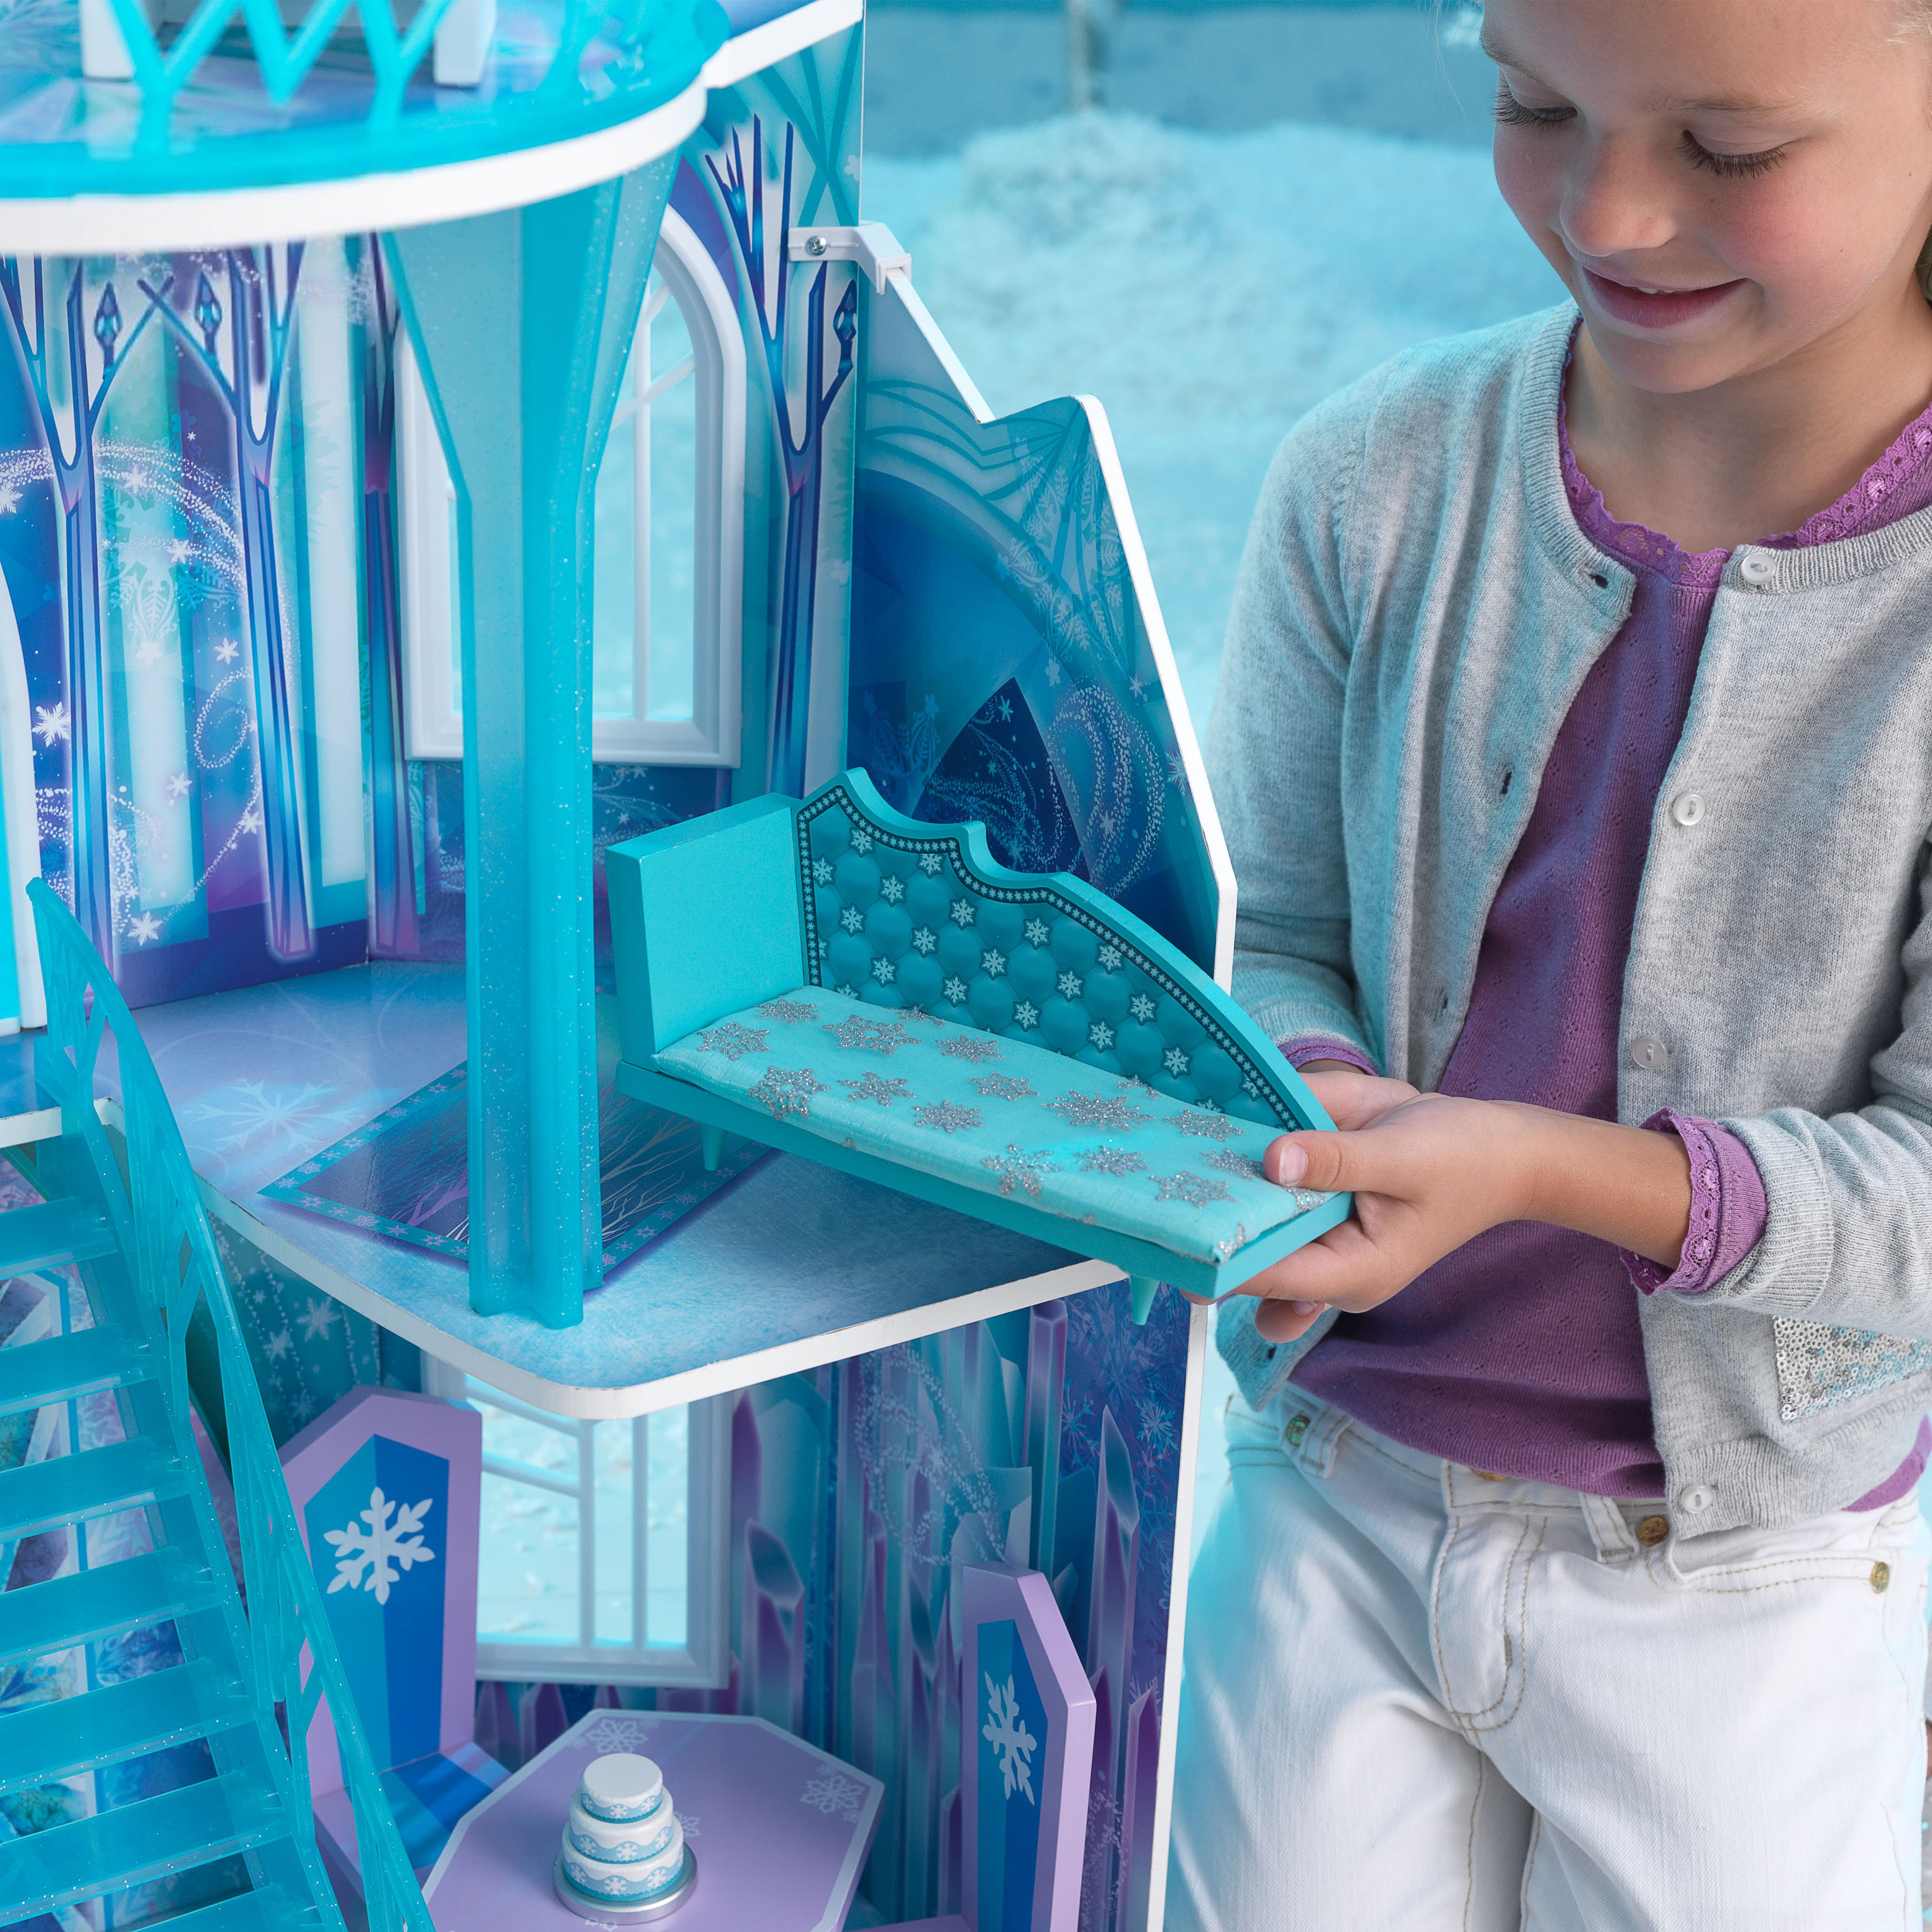 Multi-Colour KidKraft 65881 Disney Frozen Ice Castle Dollhouse